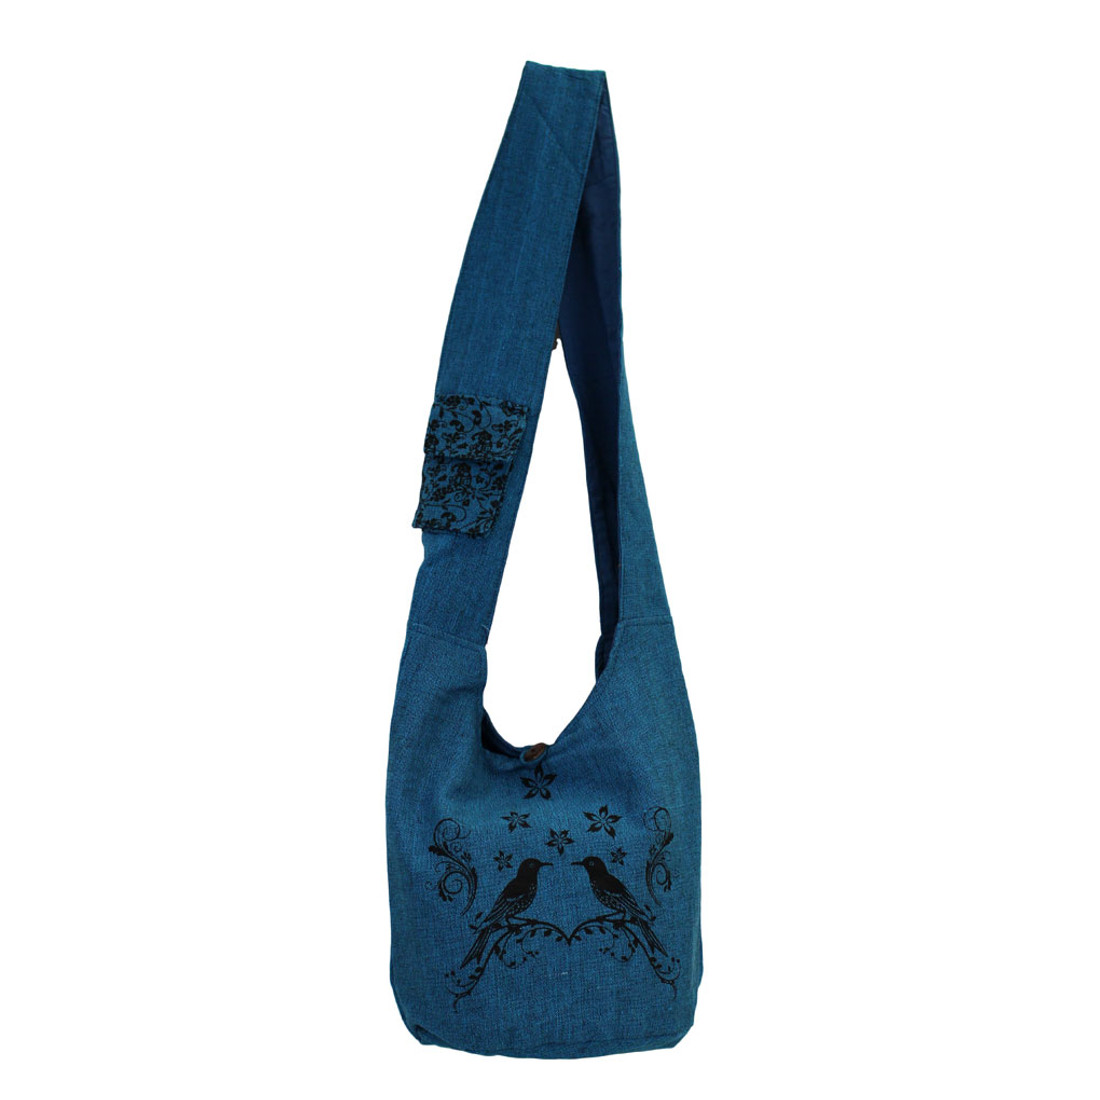 Blue Cotton Sling Bag Purse with Birds Design